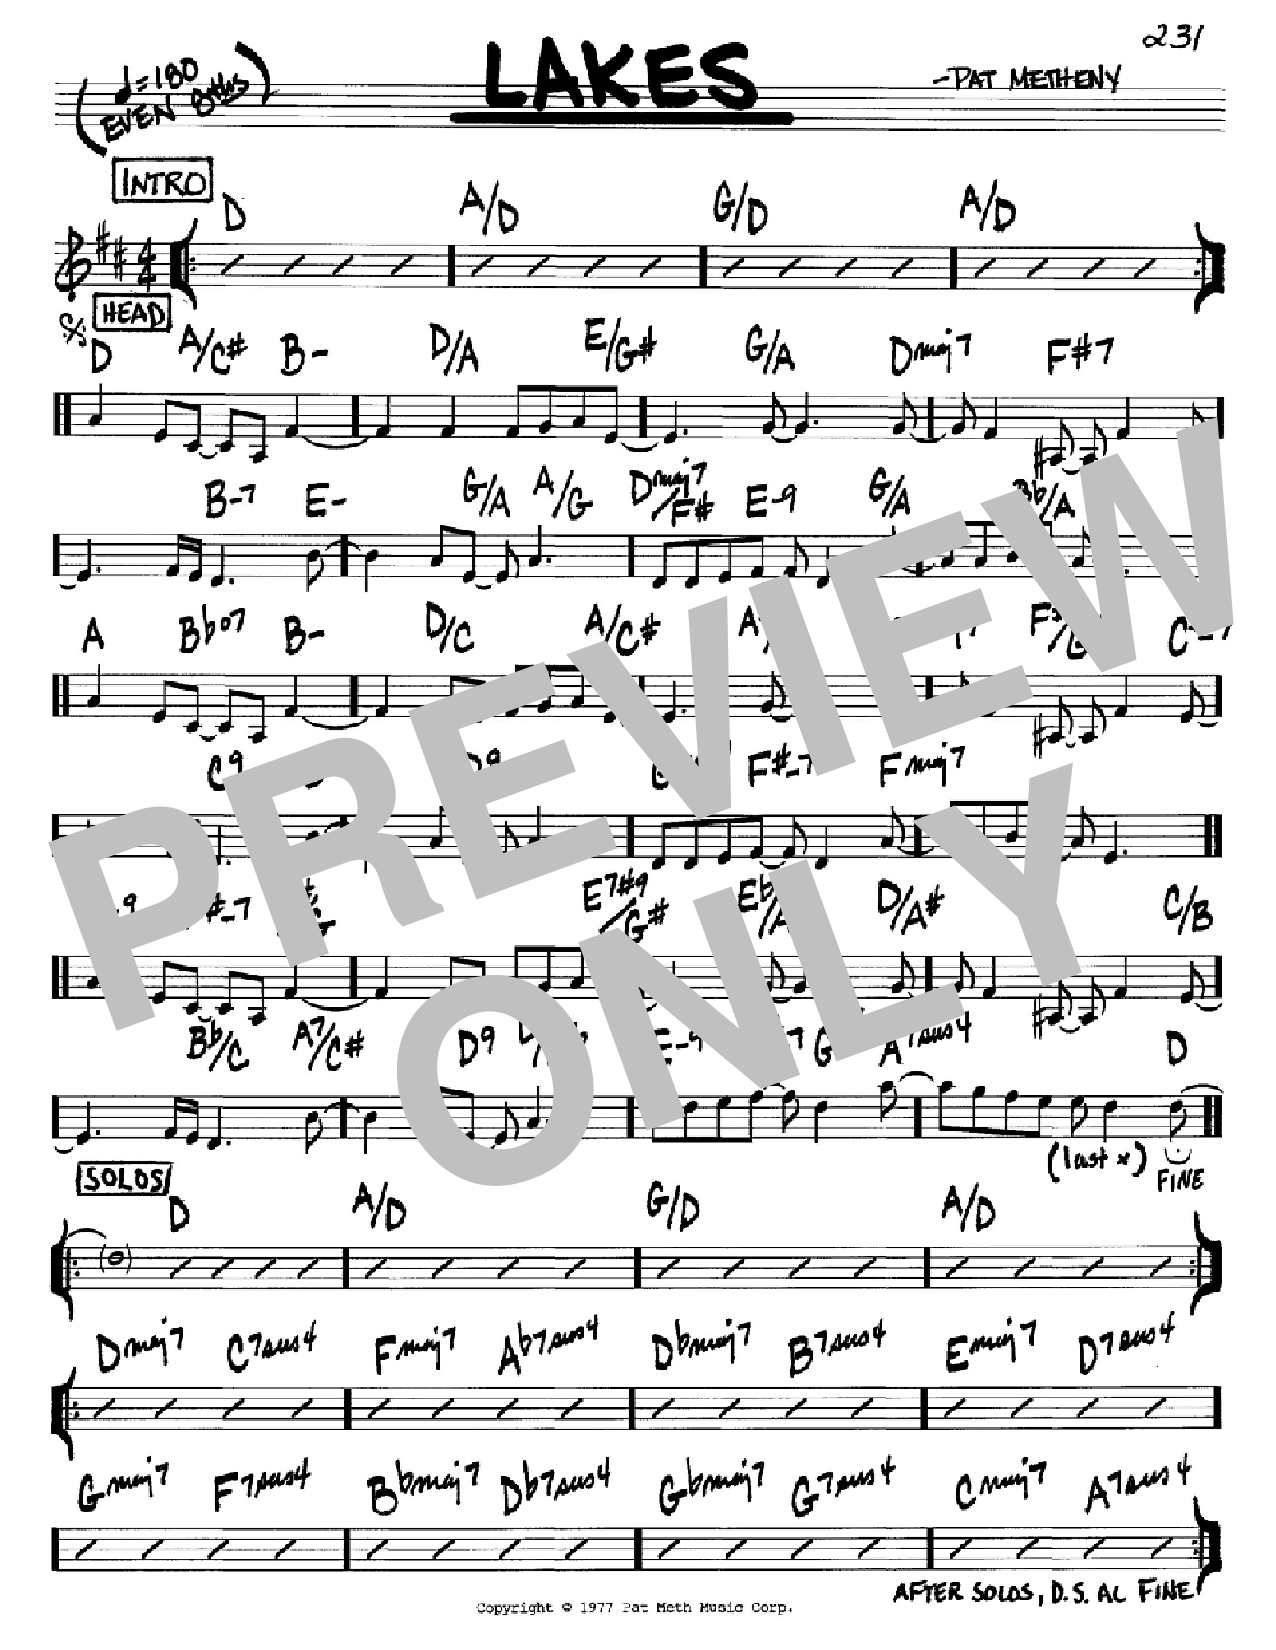 Pat Metheny Lakes Sheet Music Notes & Chords for Real Book – Melody & Chords - Download or Print PDF